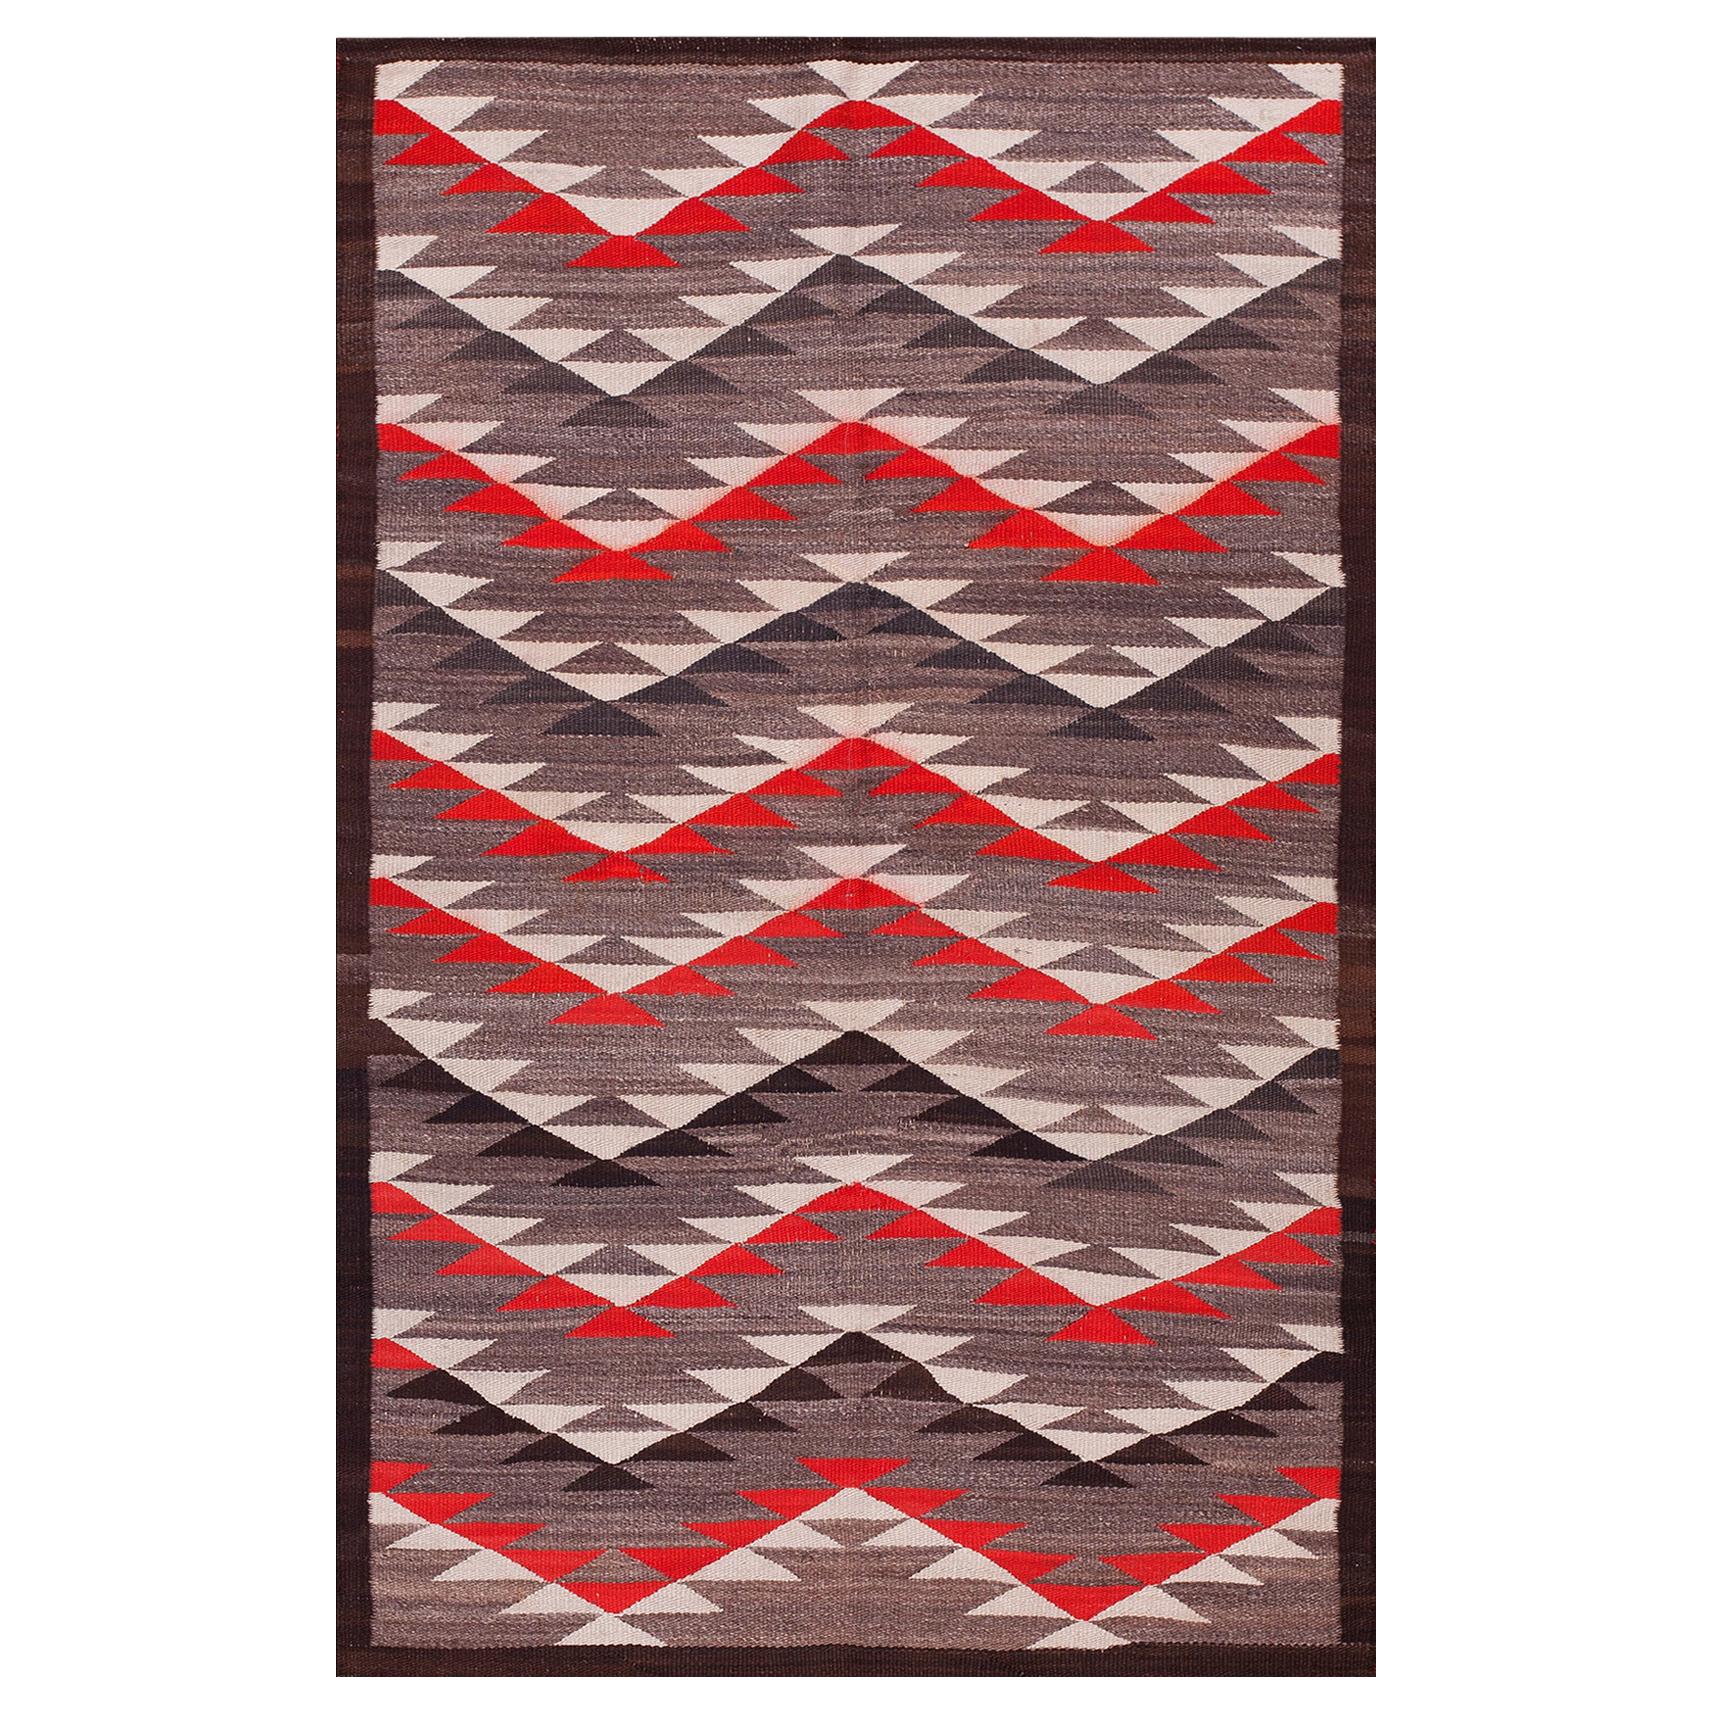 Early 20th Century American Navajo Carpet ( 3'9" x 6'4" - 114 x 193 )